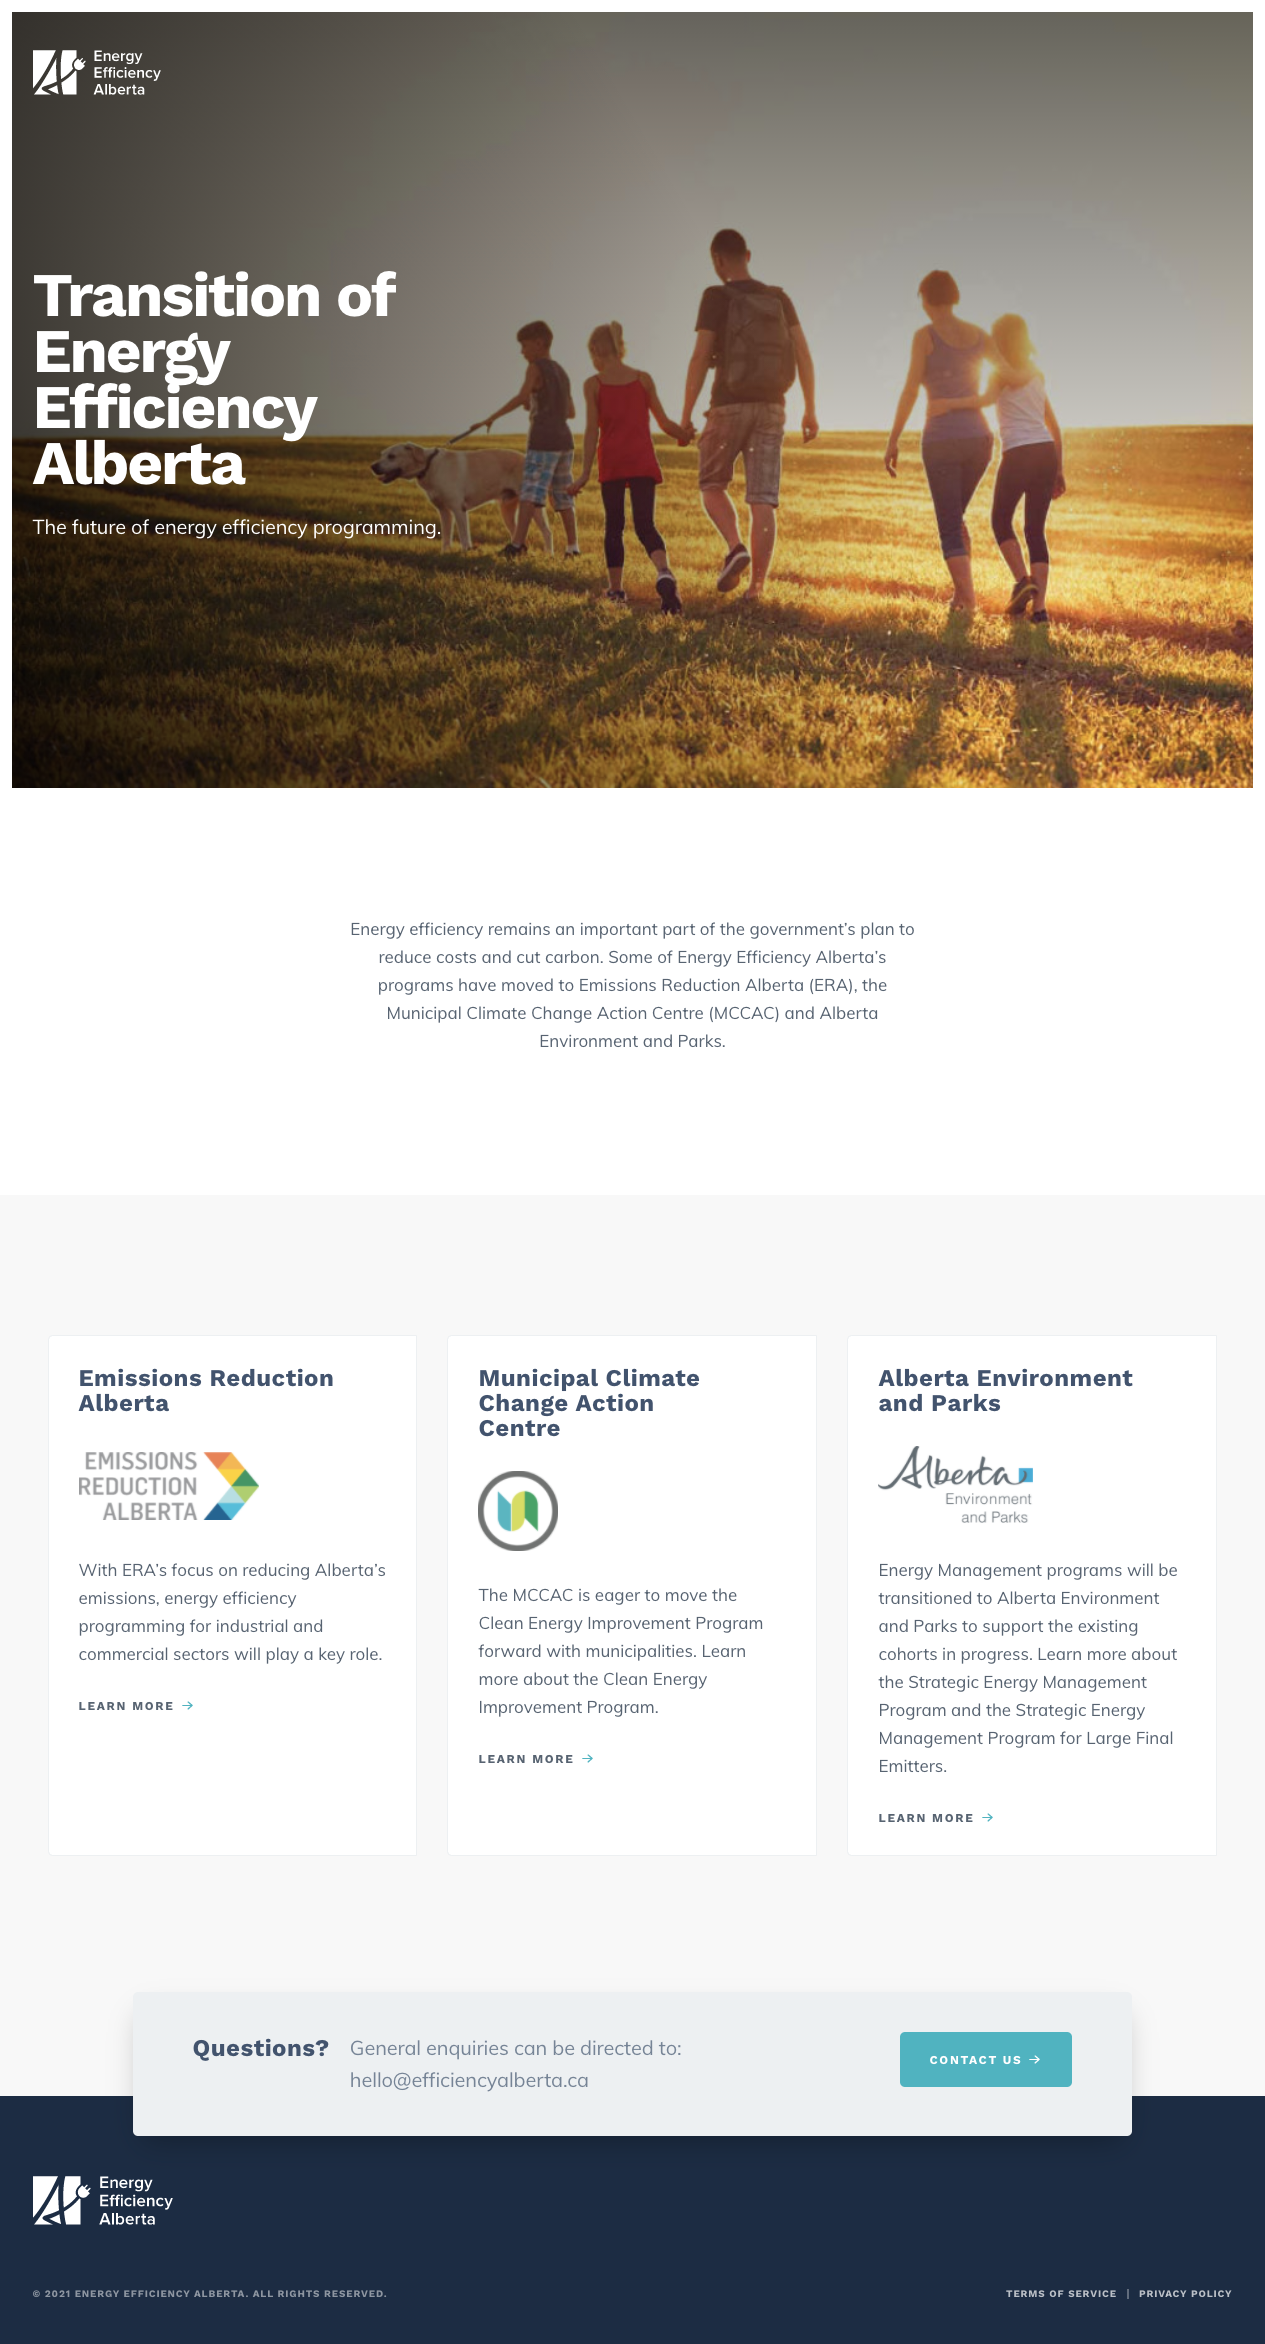 Energy Efficiency Alberta's simplified home page.